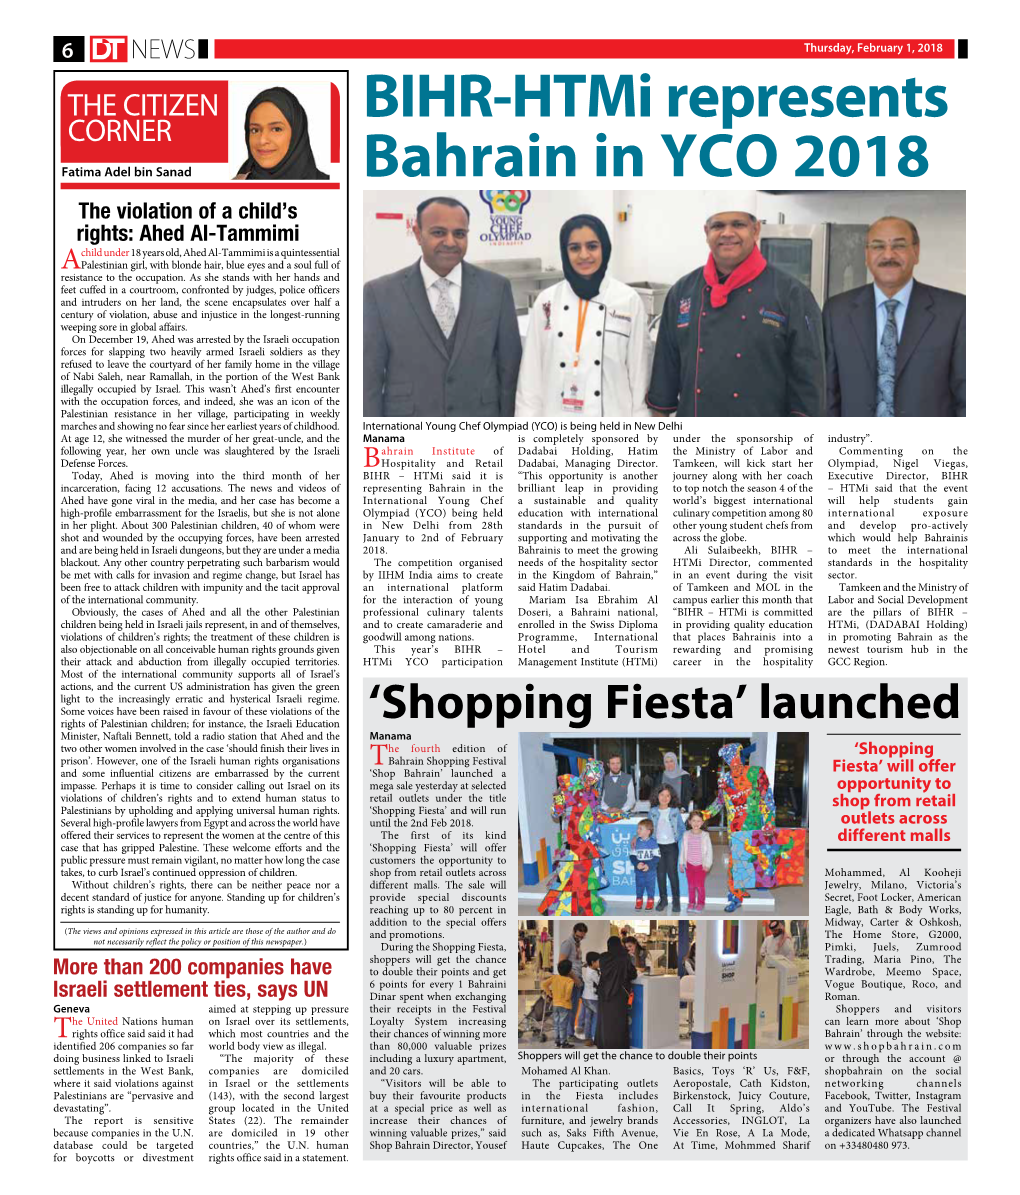 BIHR-Htmi Represents Bahrain in YCO 2018